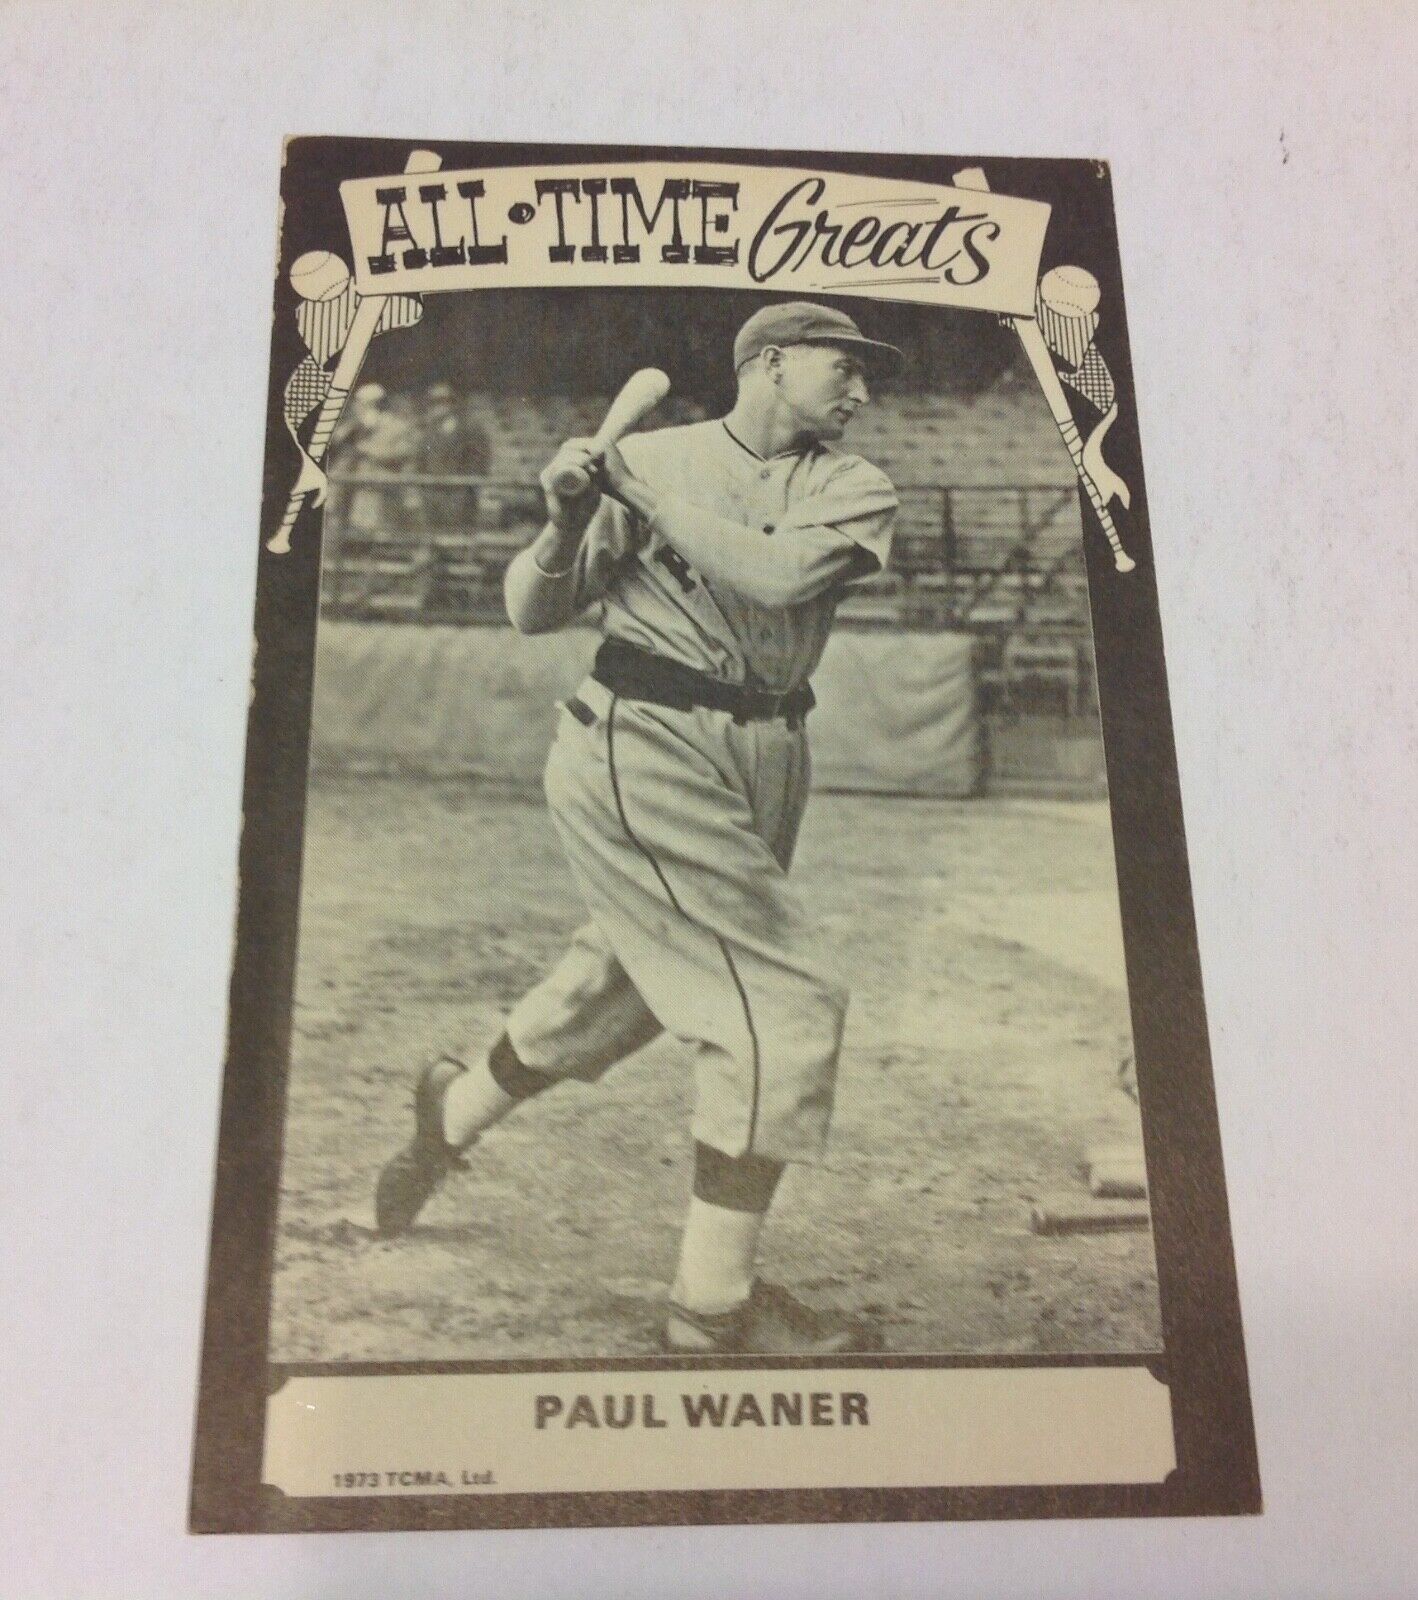 1973-80 TCMA All-Time Greats Post Card Paul Waner Blank Back MLB Baseball